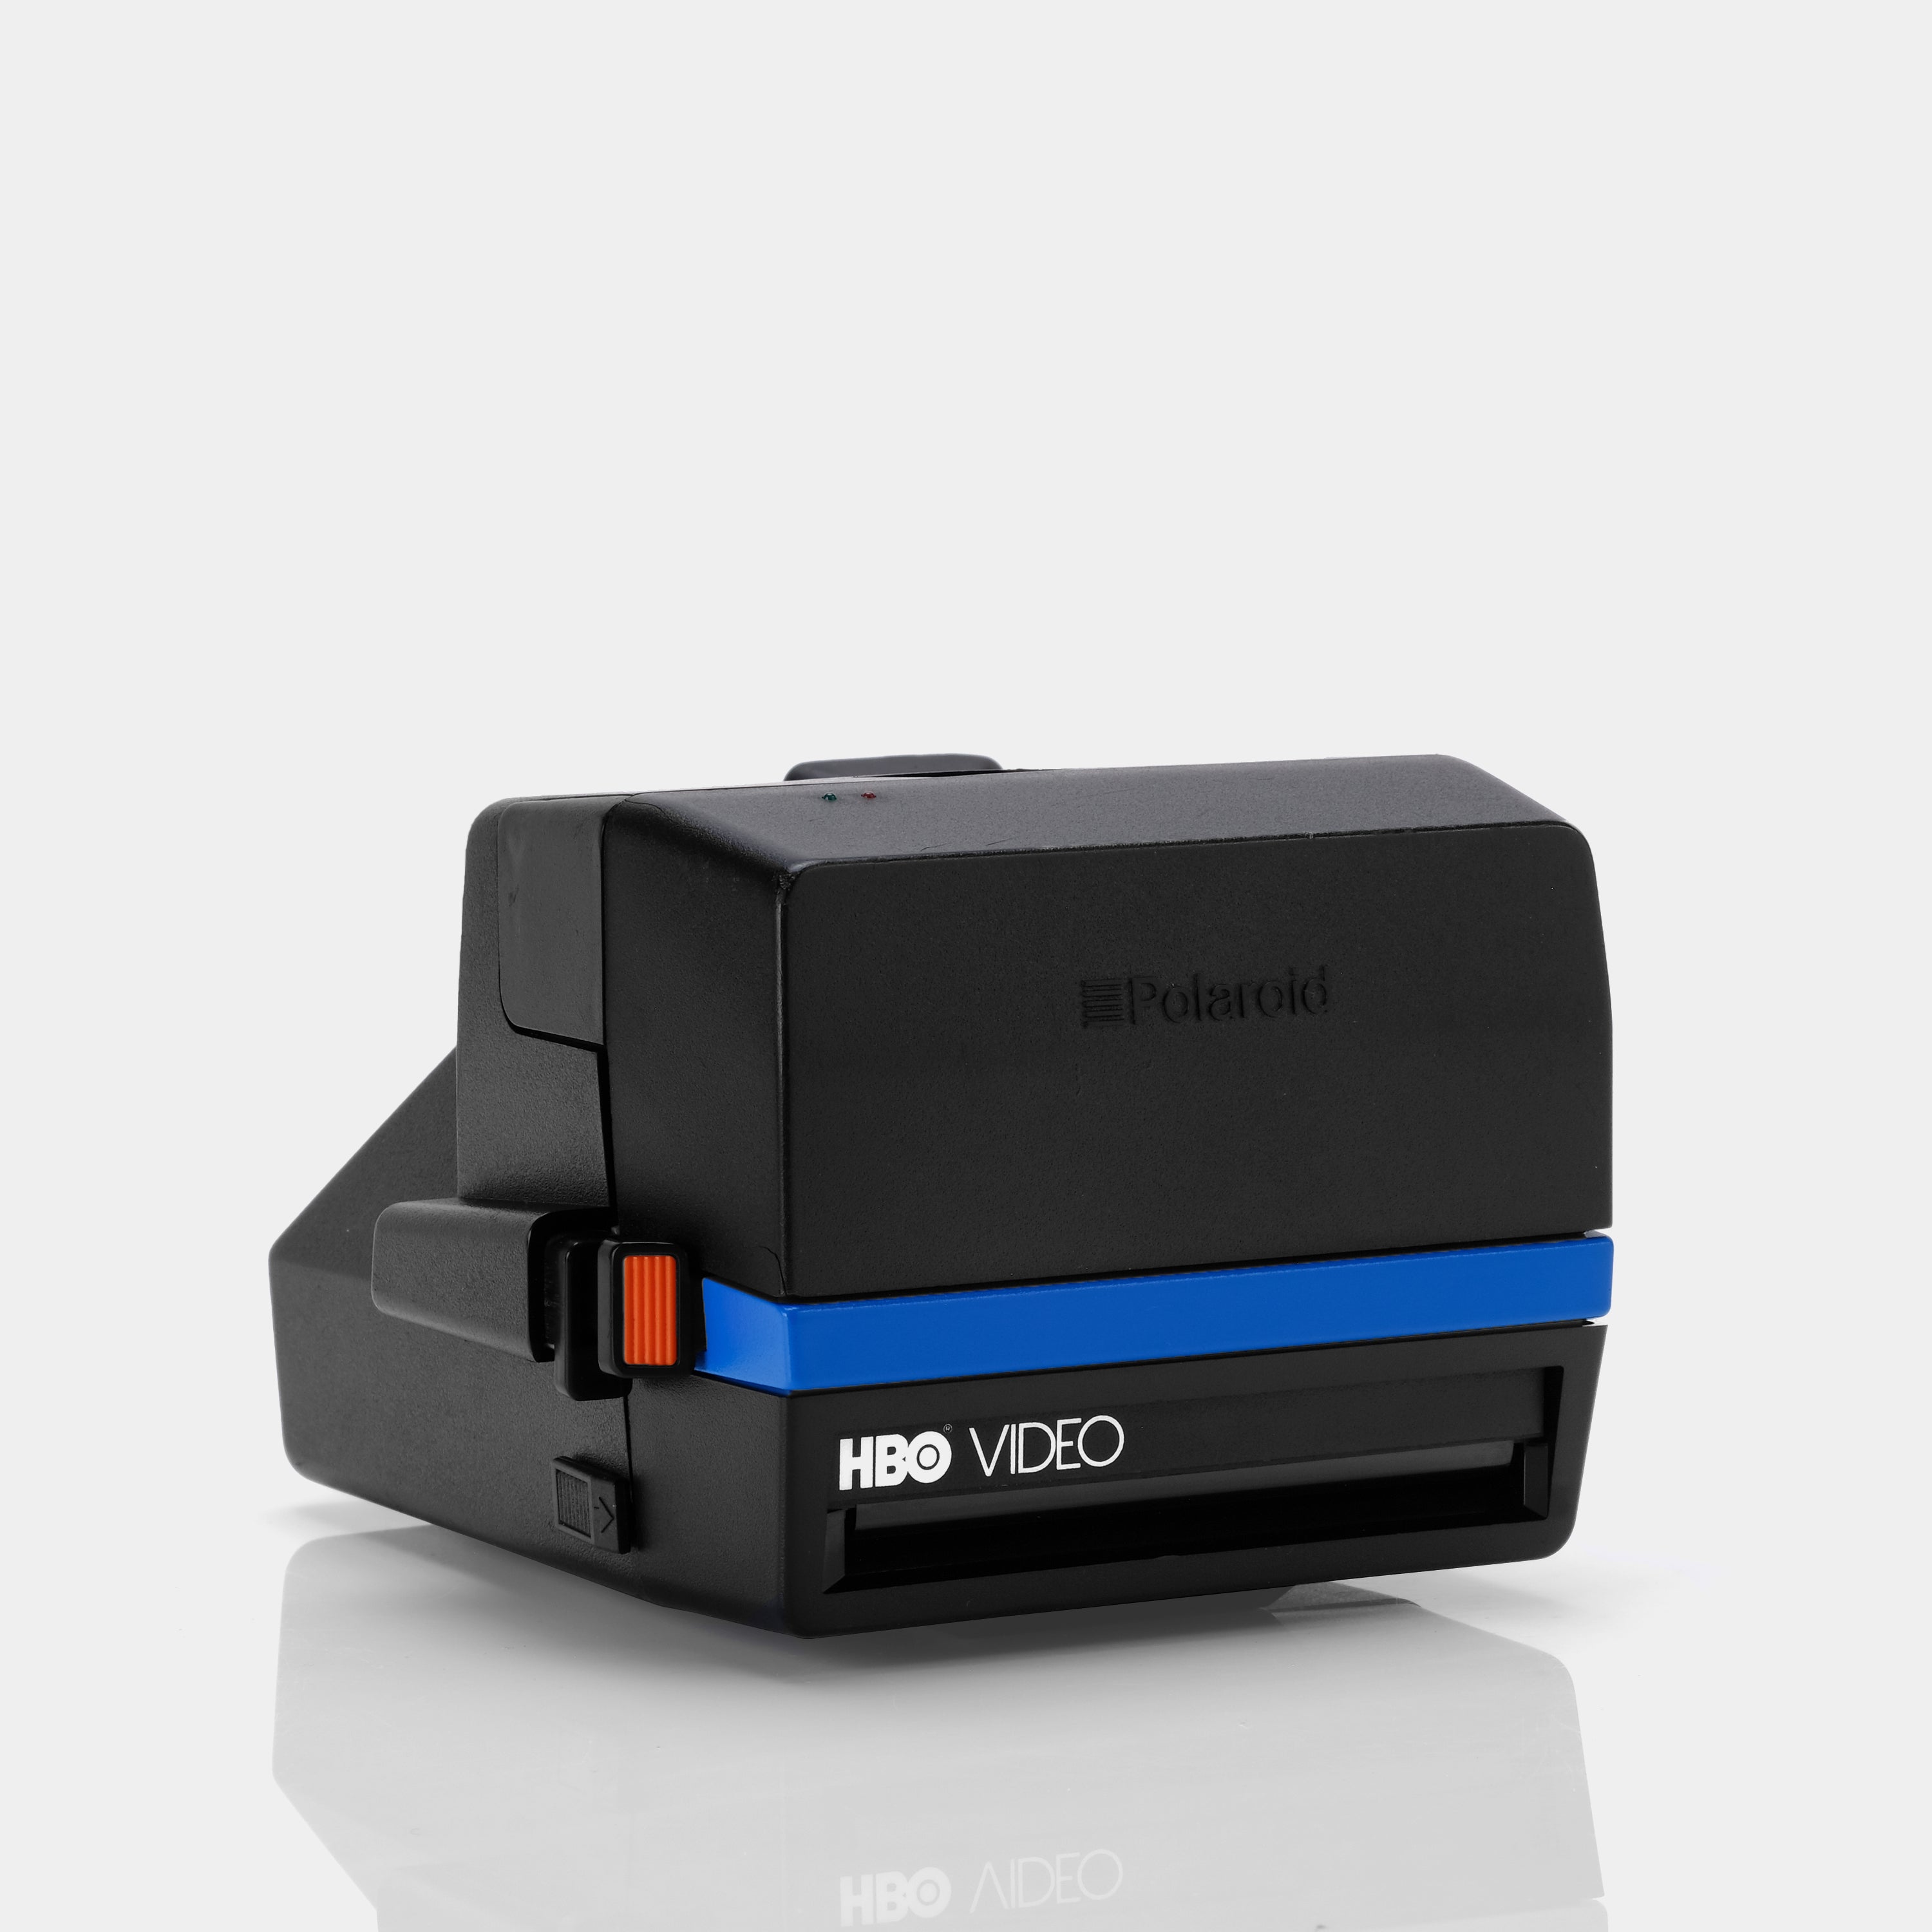 Polaroid Spirit 600 HBO Video Instant Film Camera